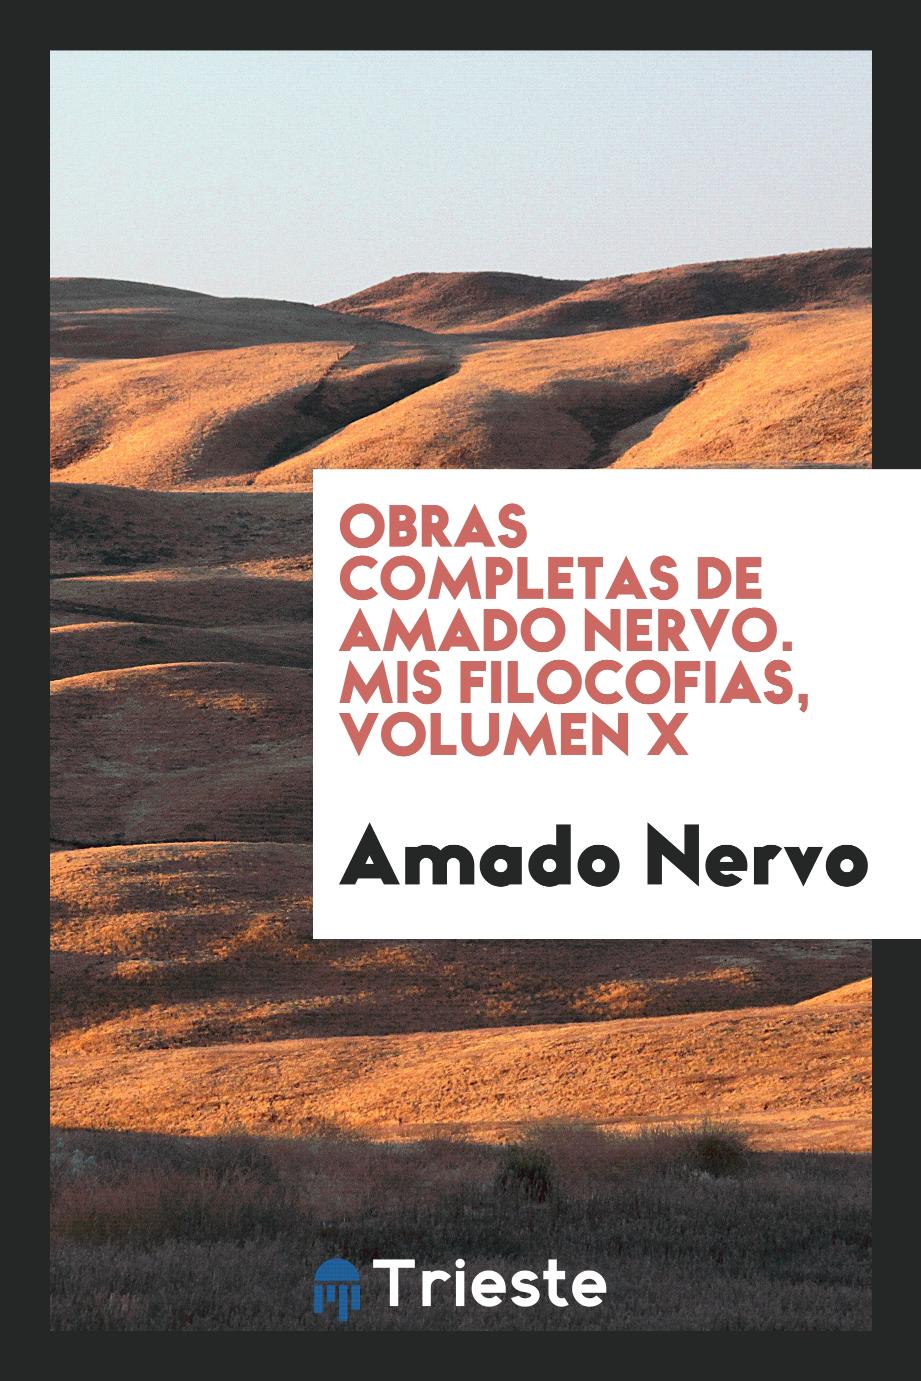 Obras completas de Amado Nervo. Mis Filocofias, Volumen X